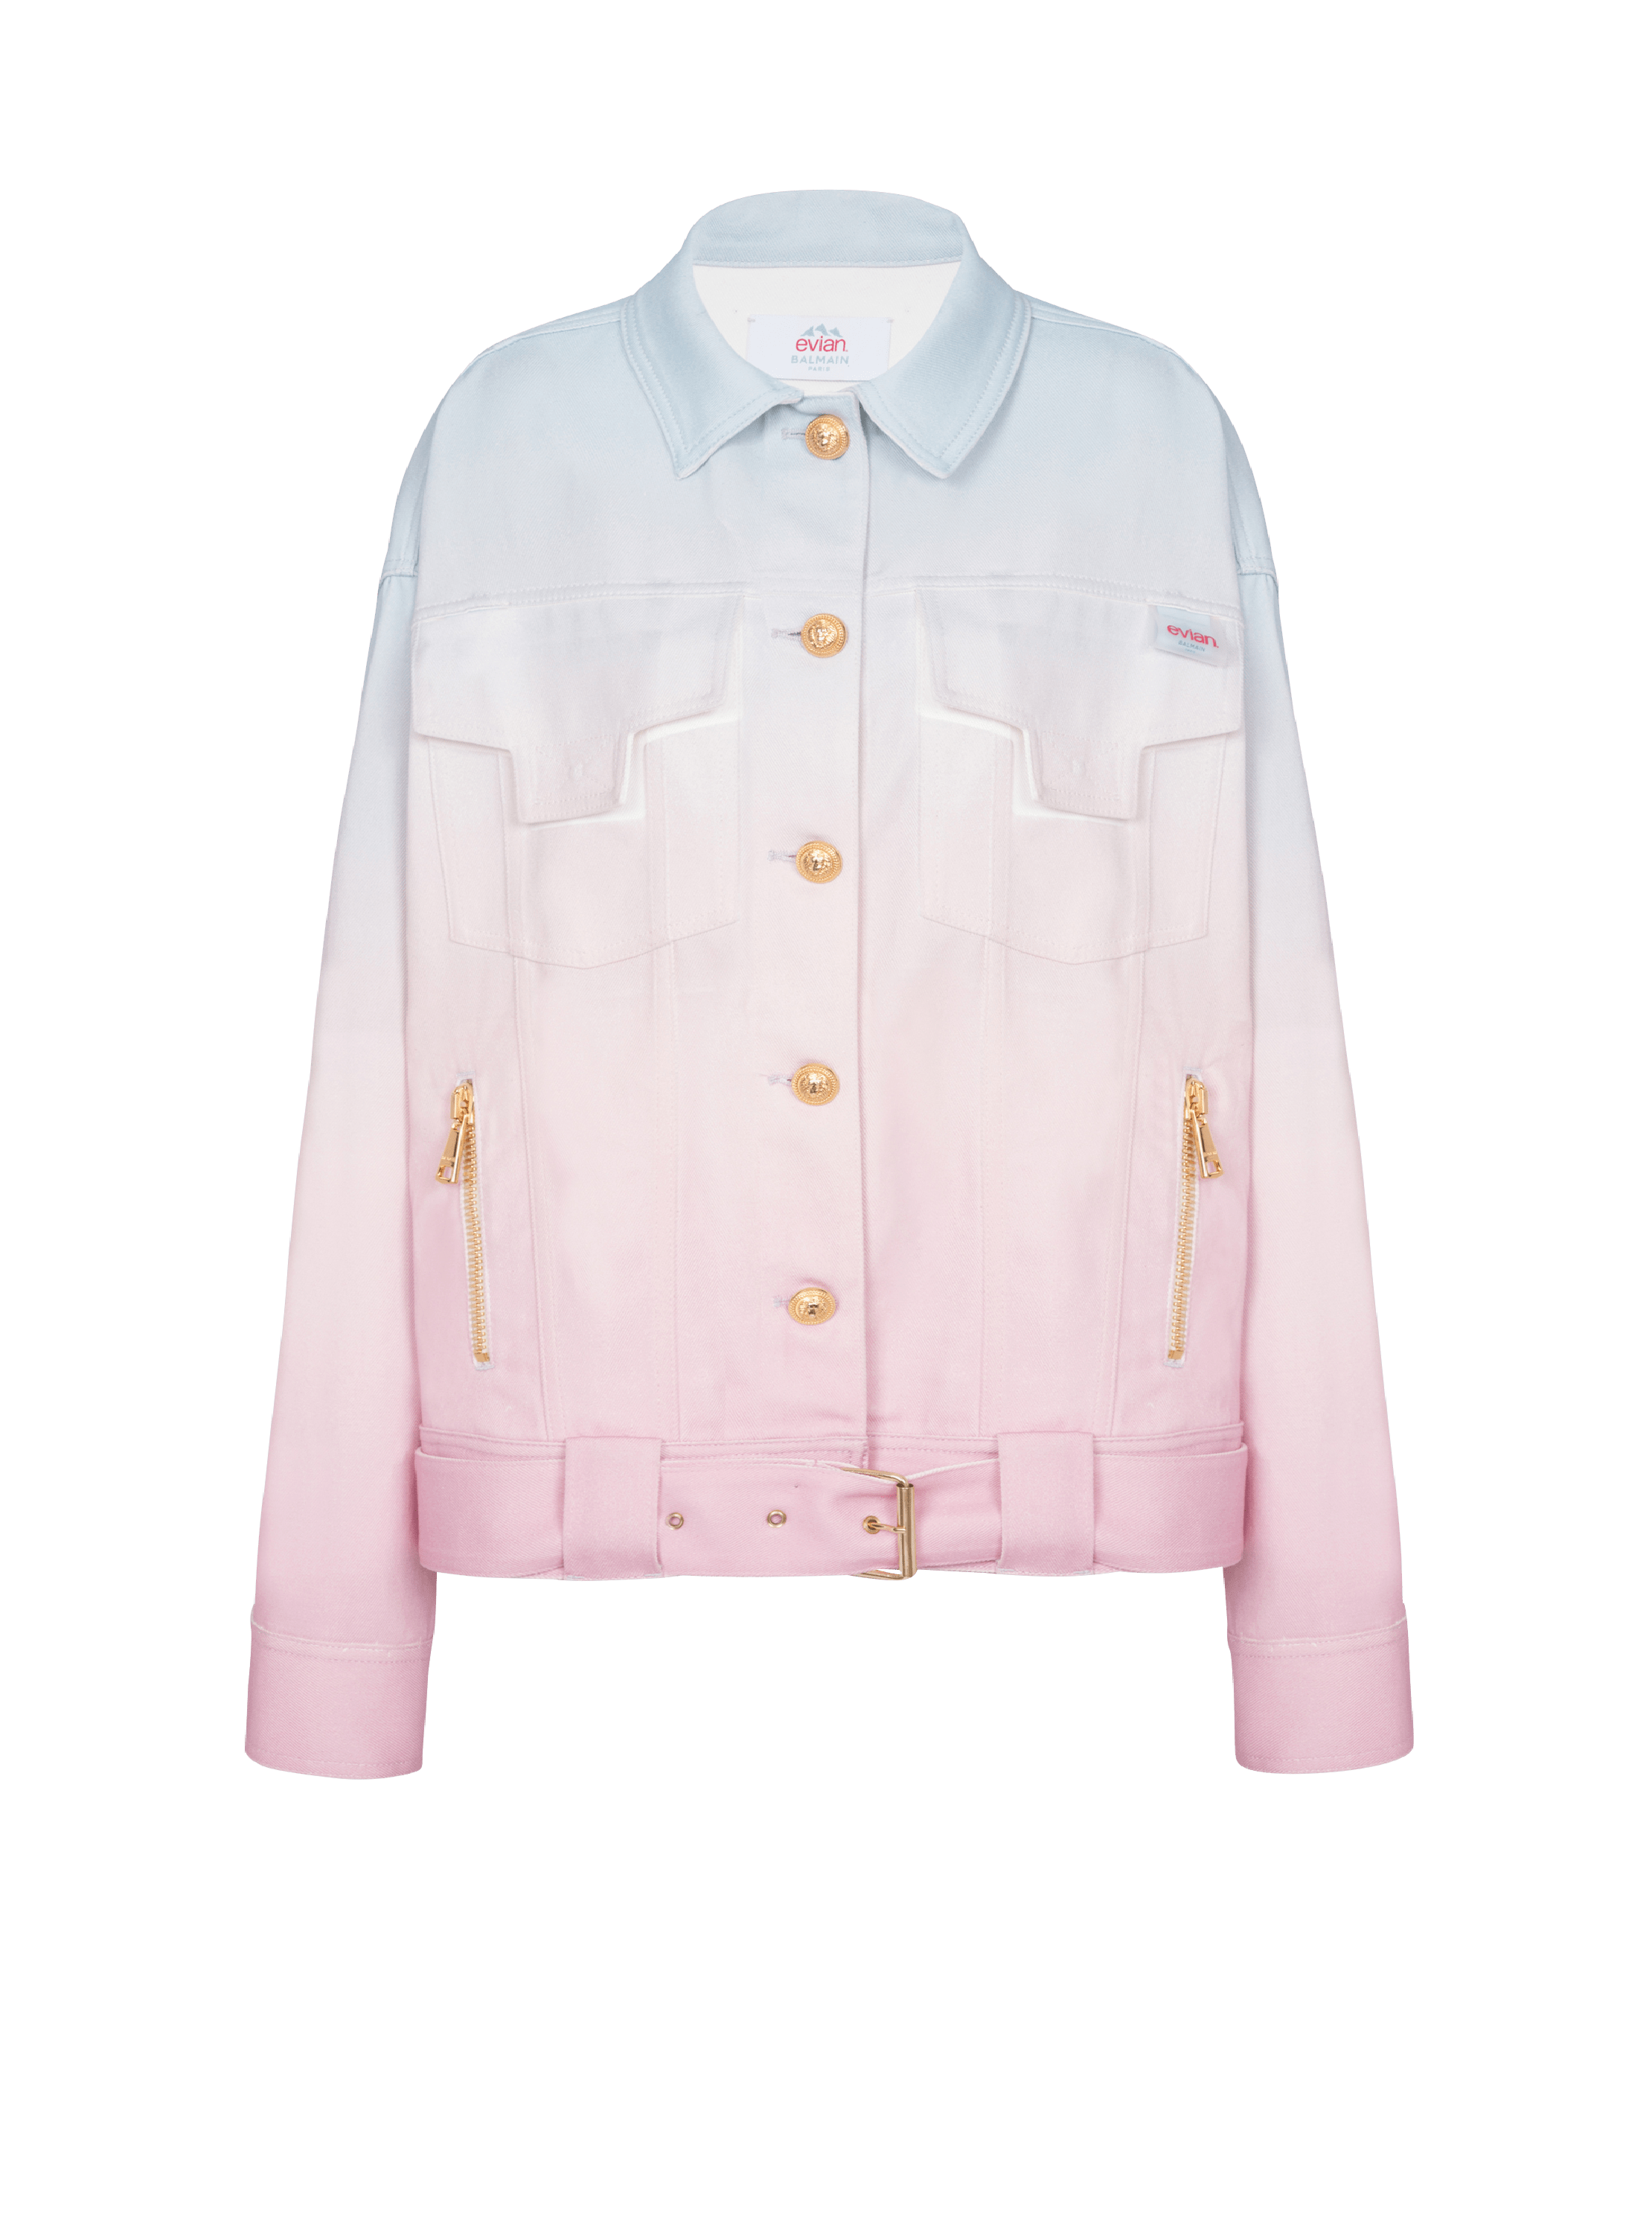 Balmain x Evian - オーバーサイズジャケット, 色とりどり, hi-res